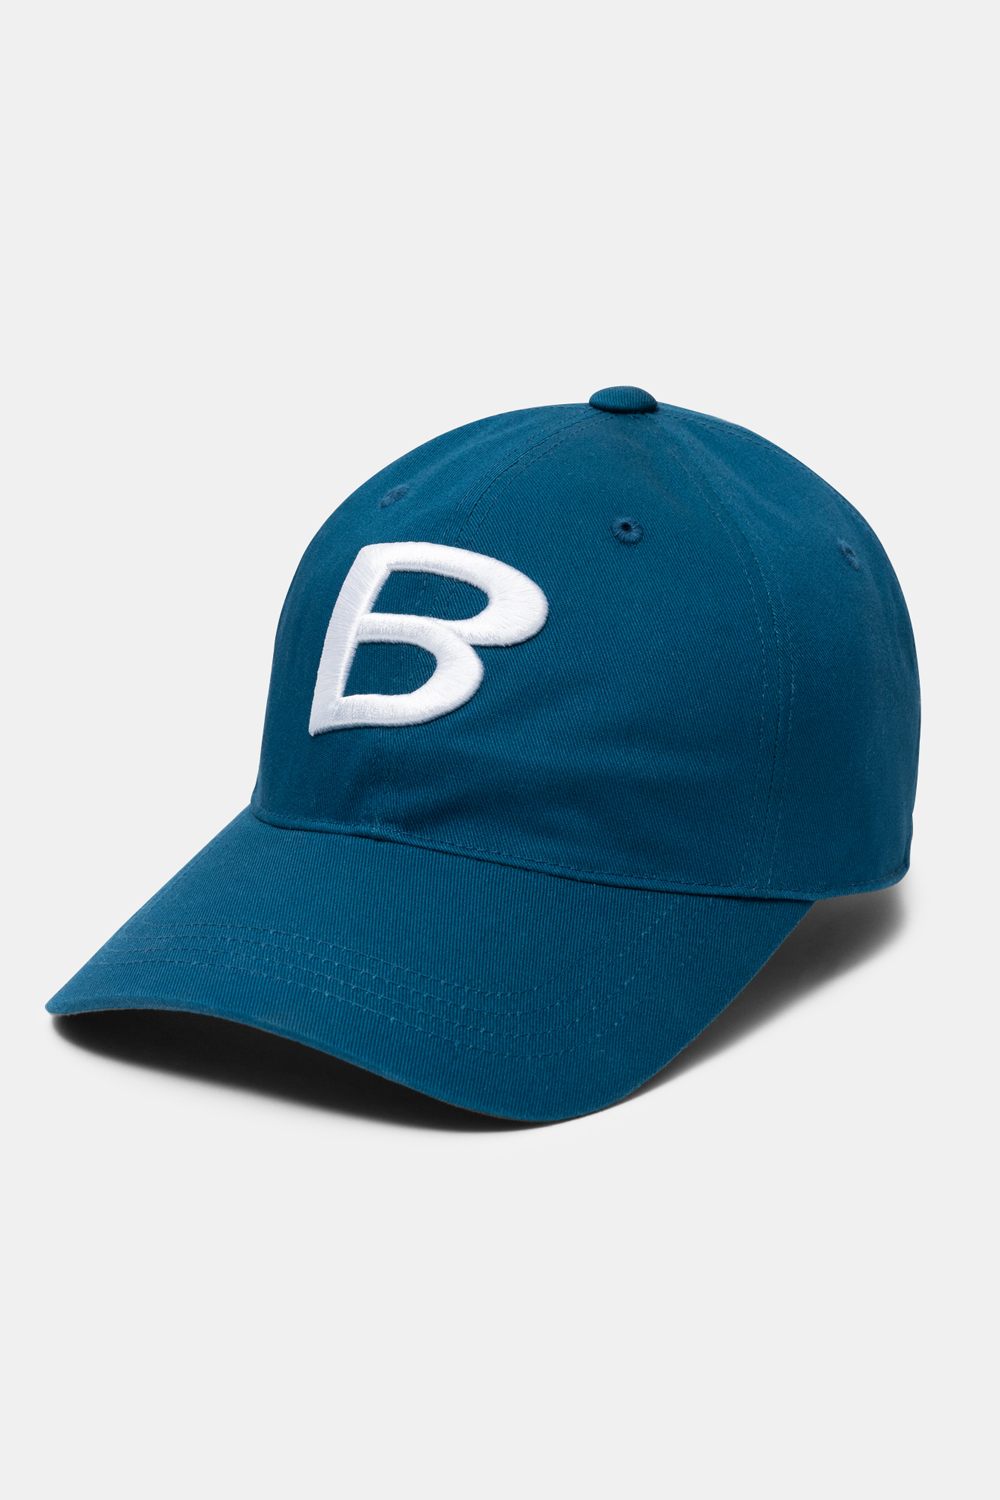 B LOGO BALL CAP/DBLDARK BLUE